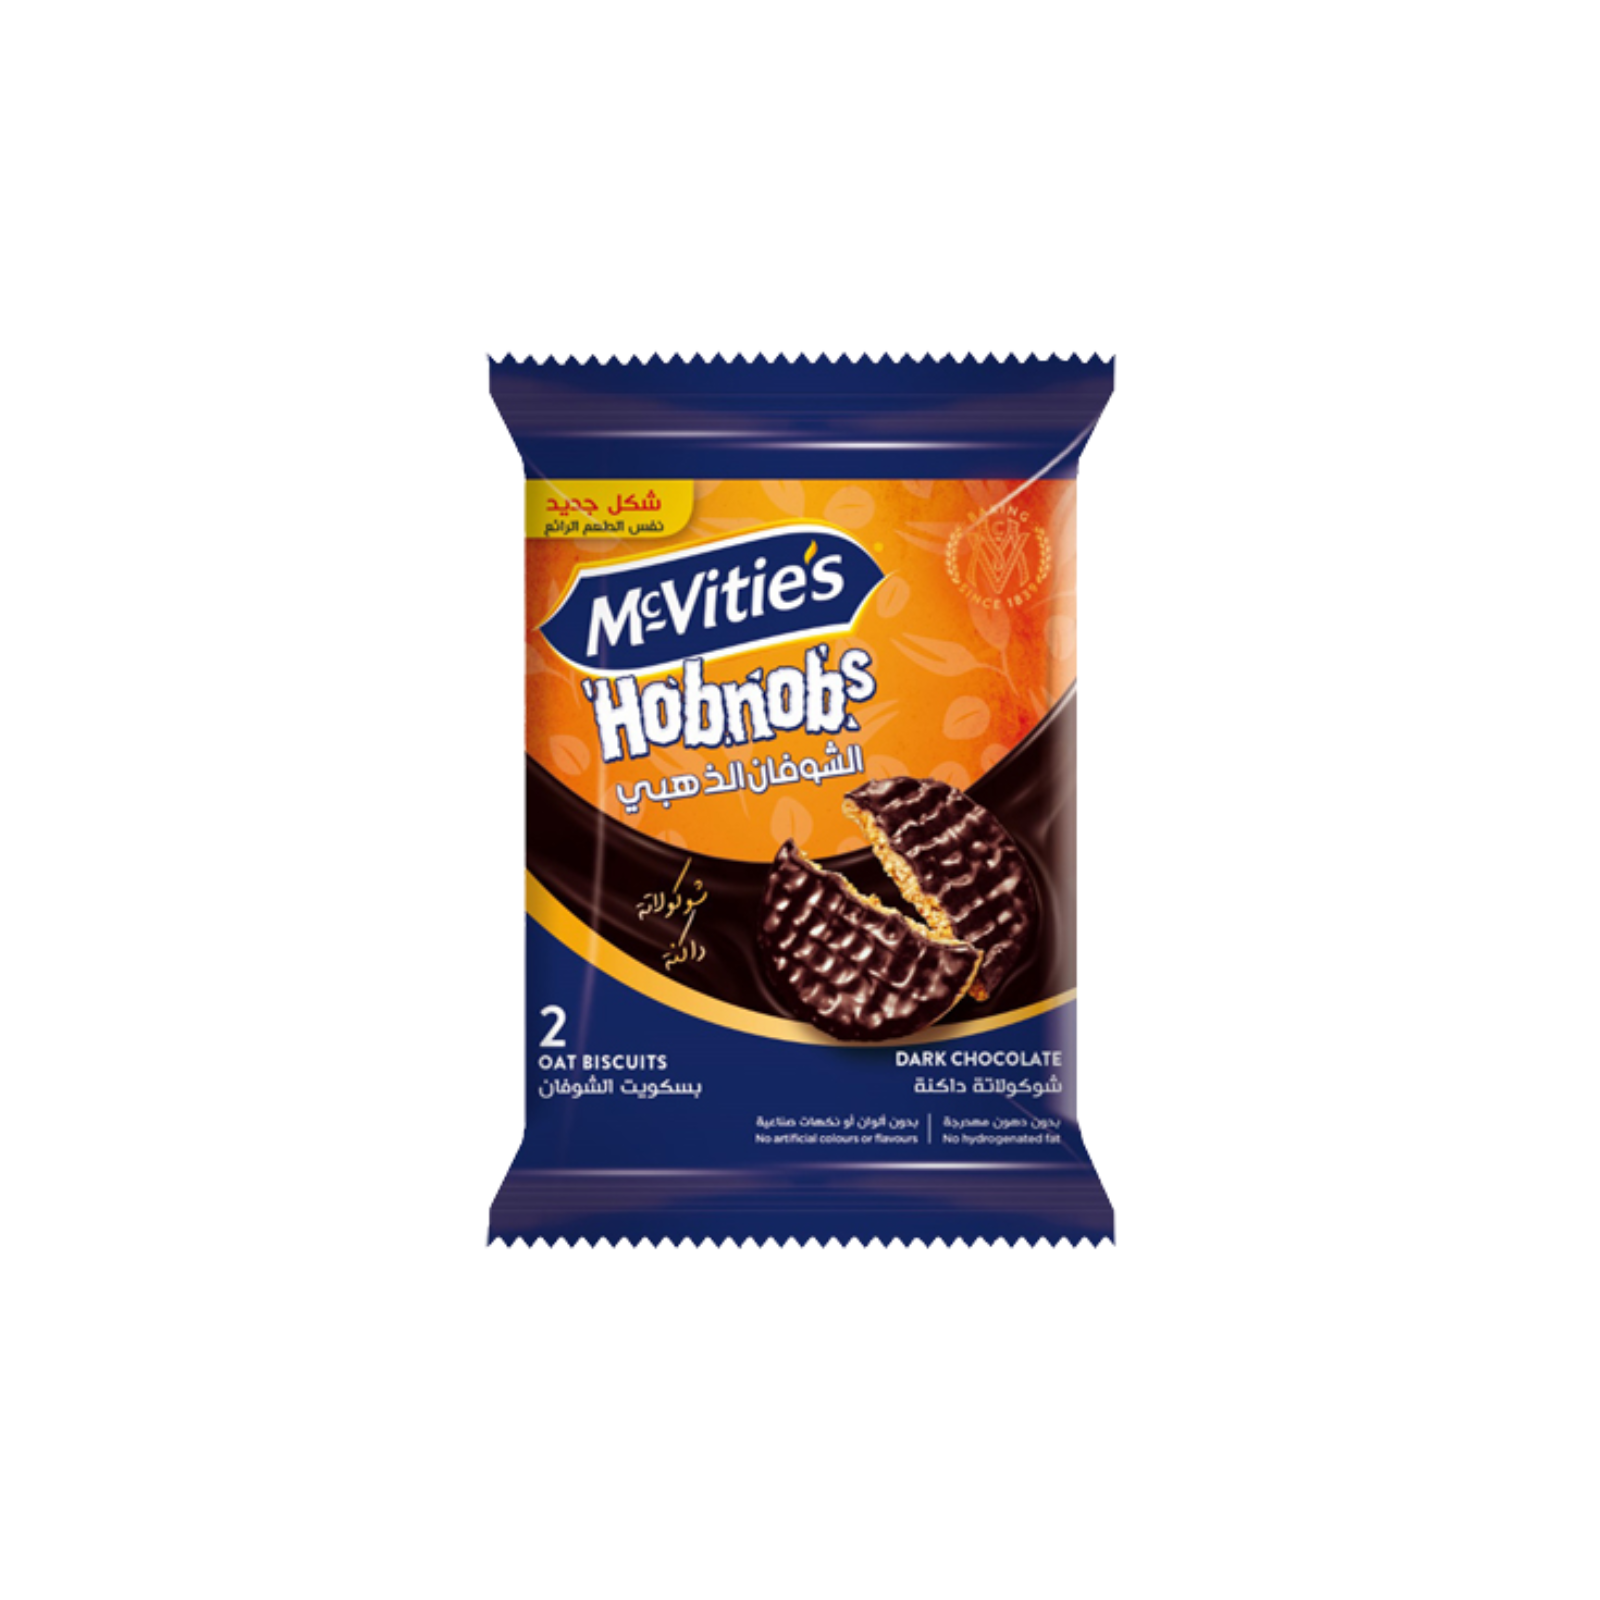 Mcvitie's Hobnobs 2 Oat Biscuits with Dark Chocolate 28.5g